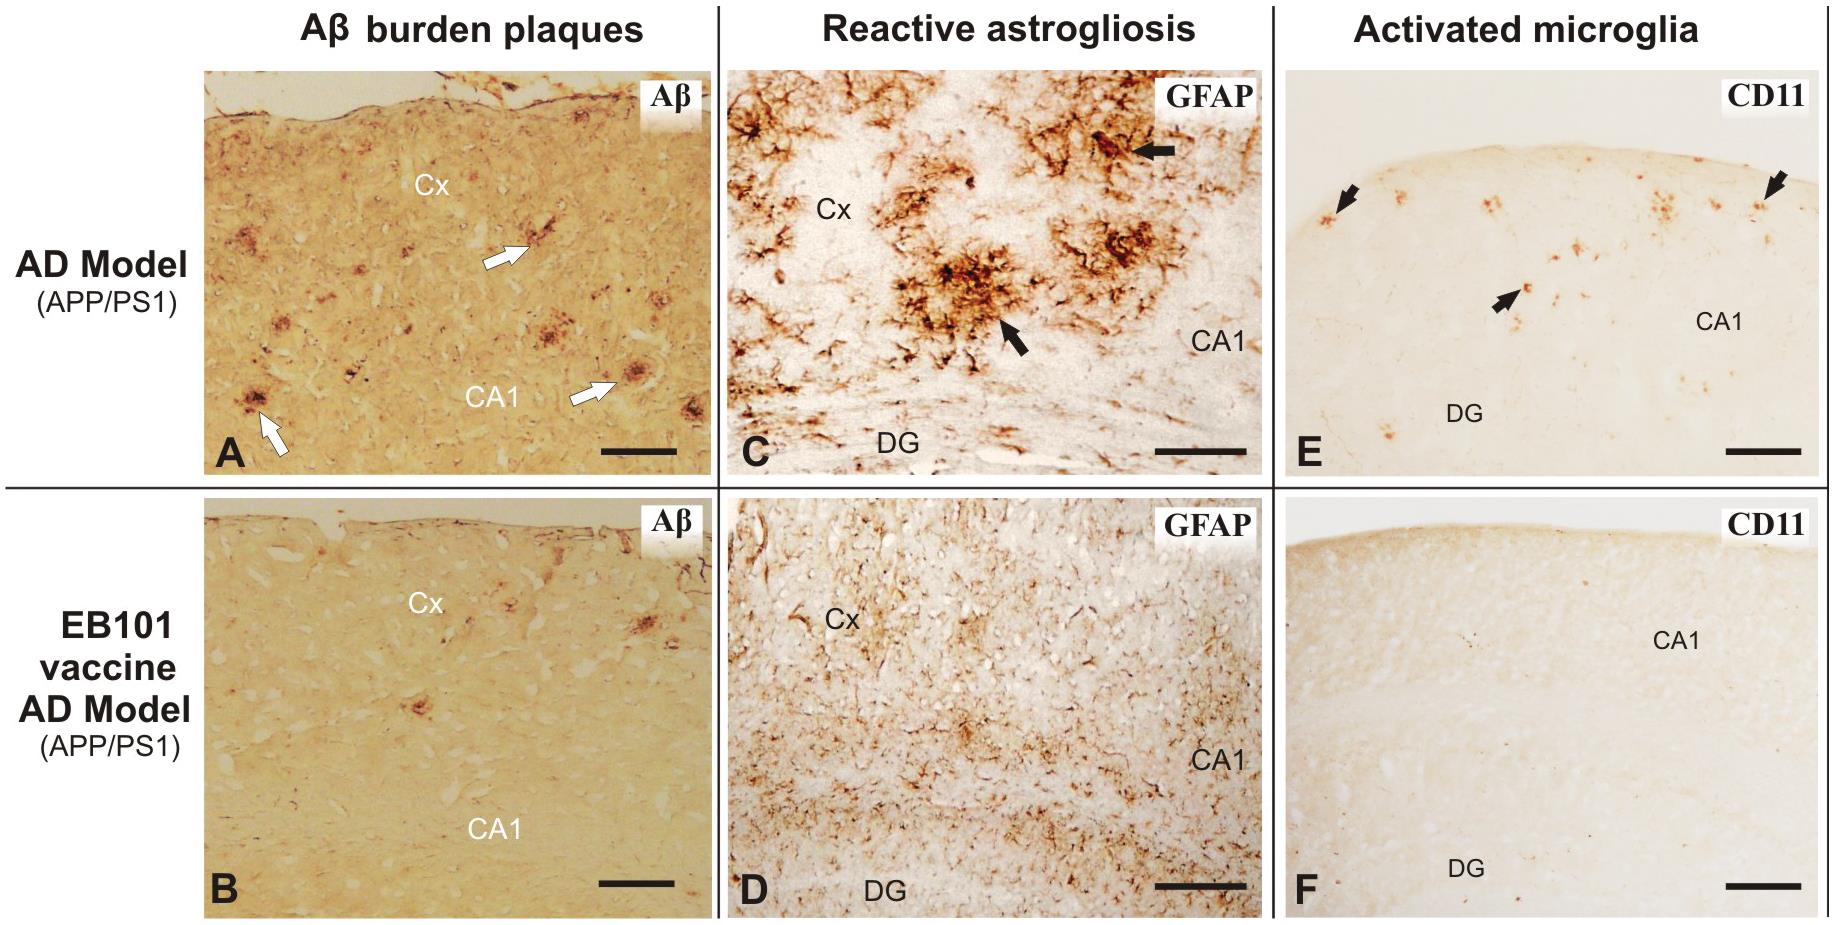 Effect of EB101 vaccine on Aβ deposits, astroglia and microglia in APP/PS1 mouse brain. 